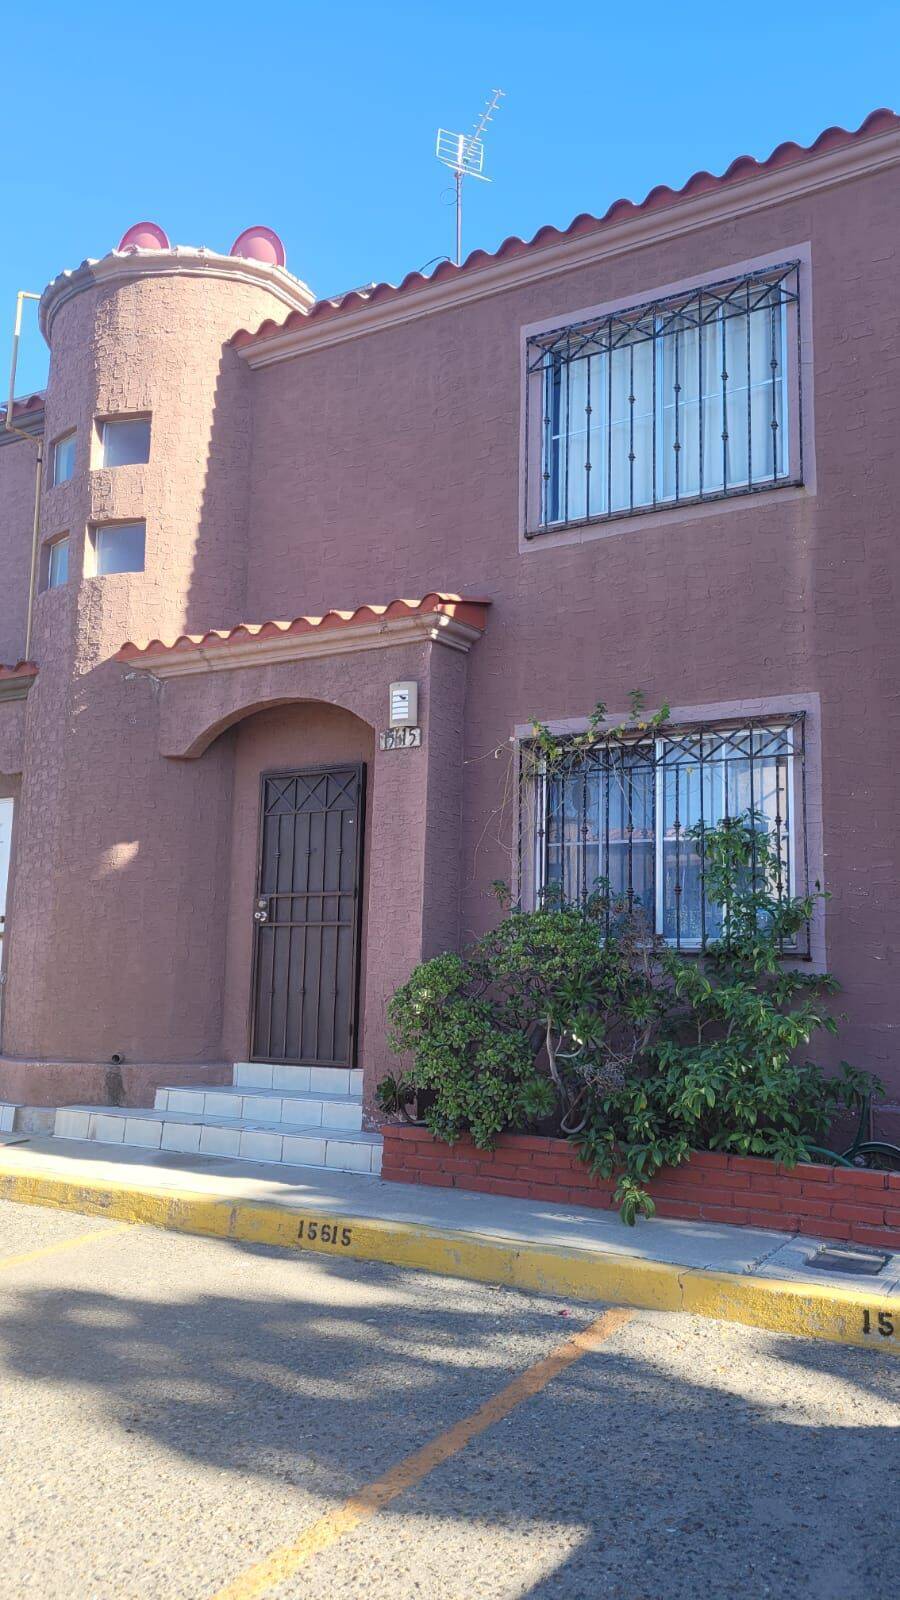 #812 - Casa para Renta en Tijuana - BC